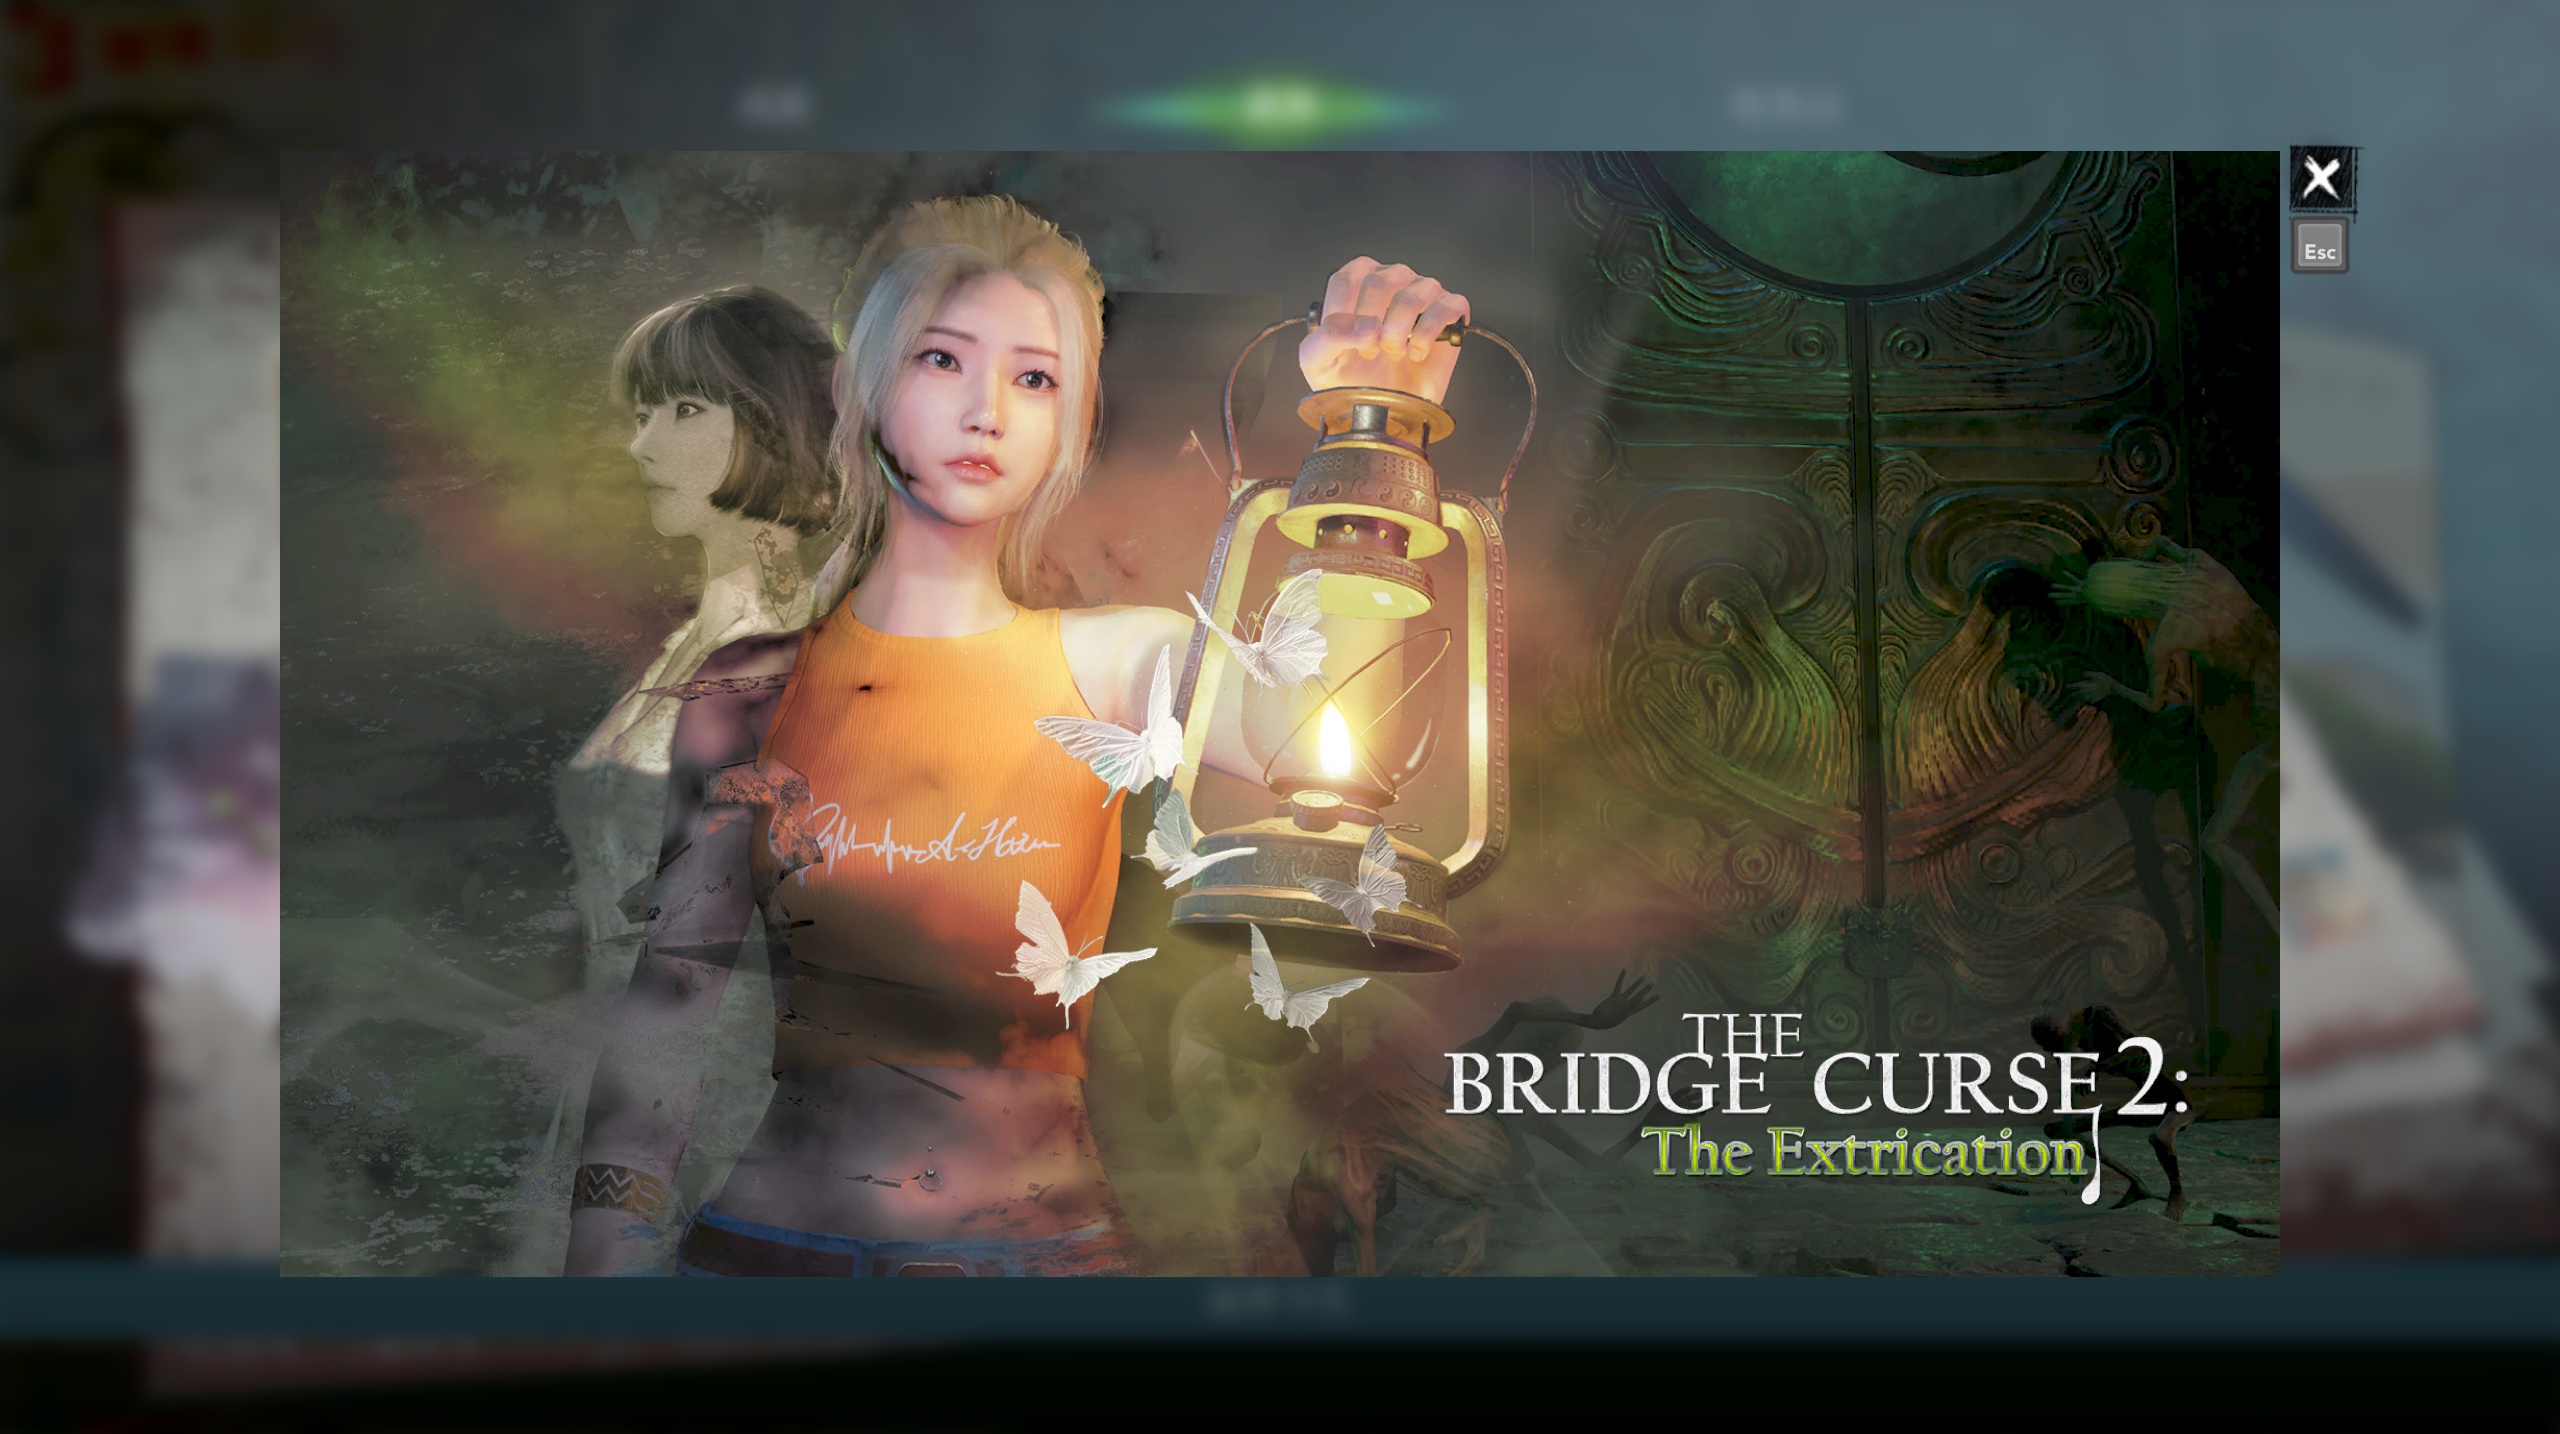 The-Bridge-Curse-2-The-Extrication-女鬼橋2：釋魂路.jpg